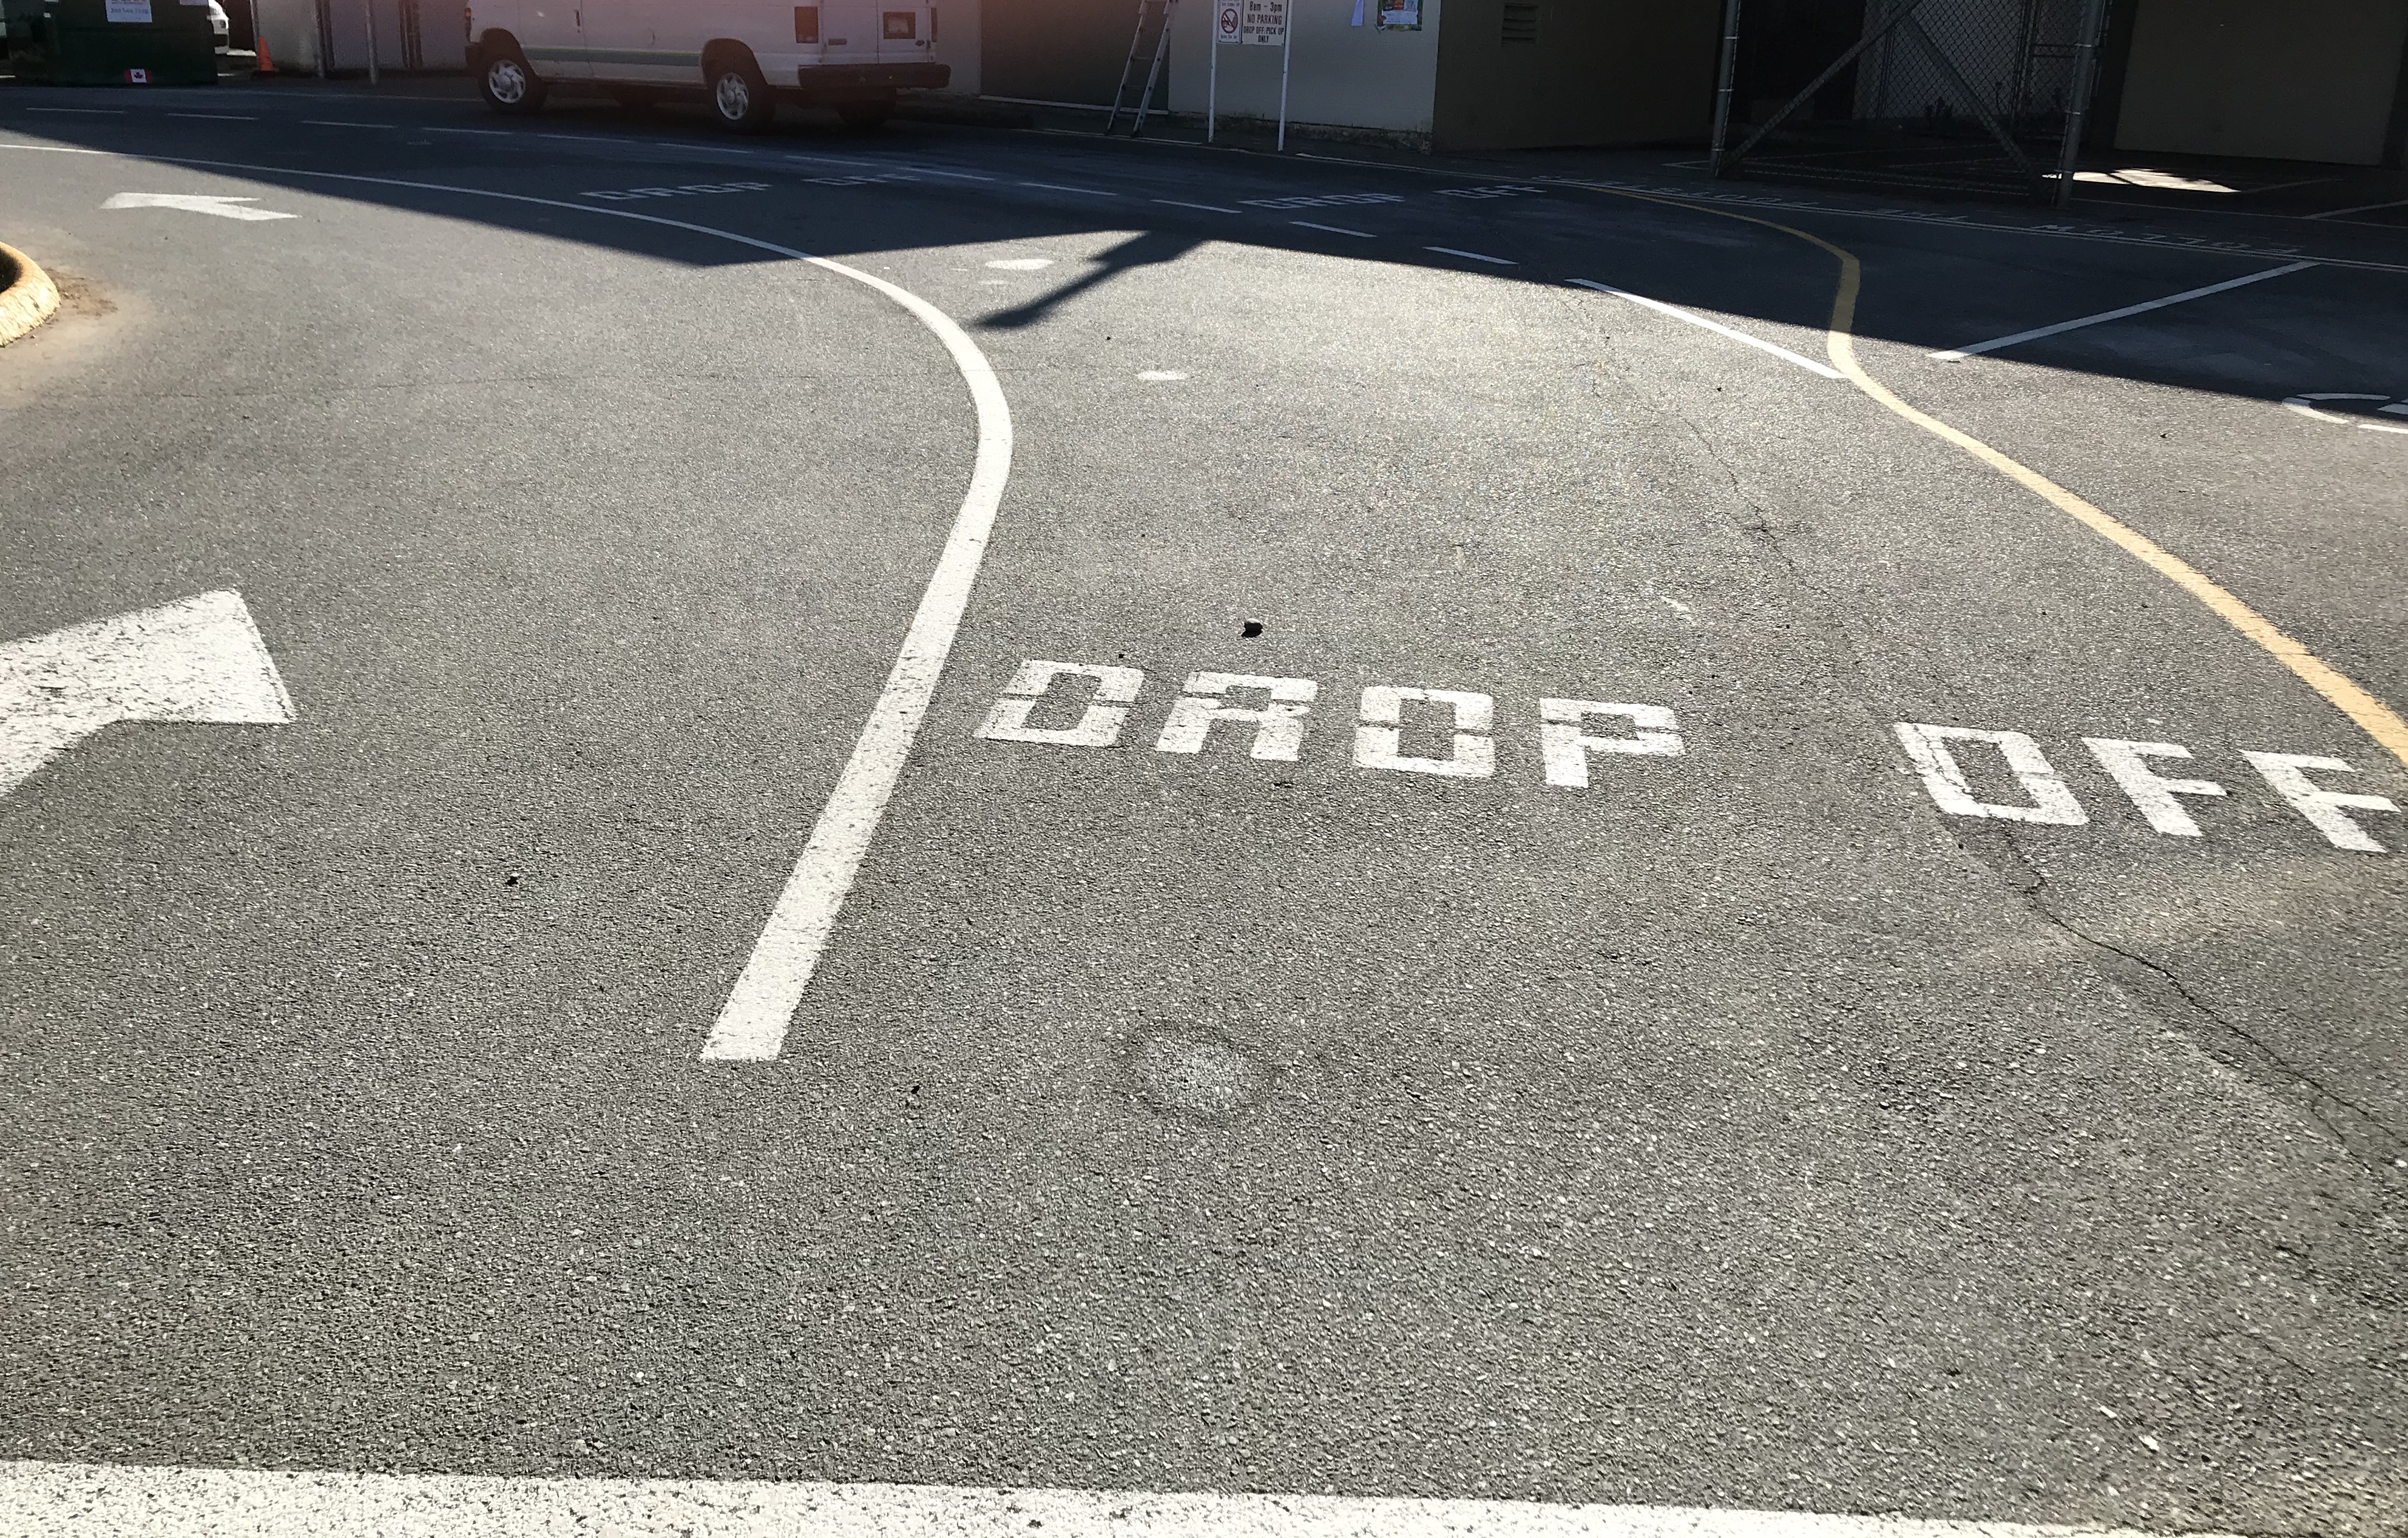 Drop Off Zone